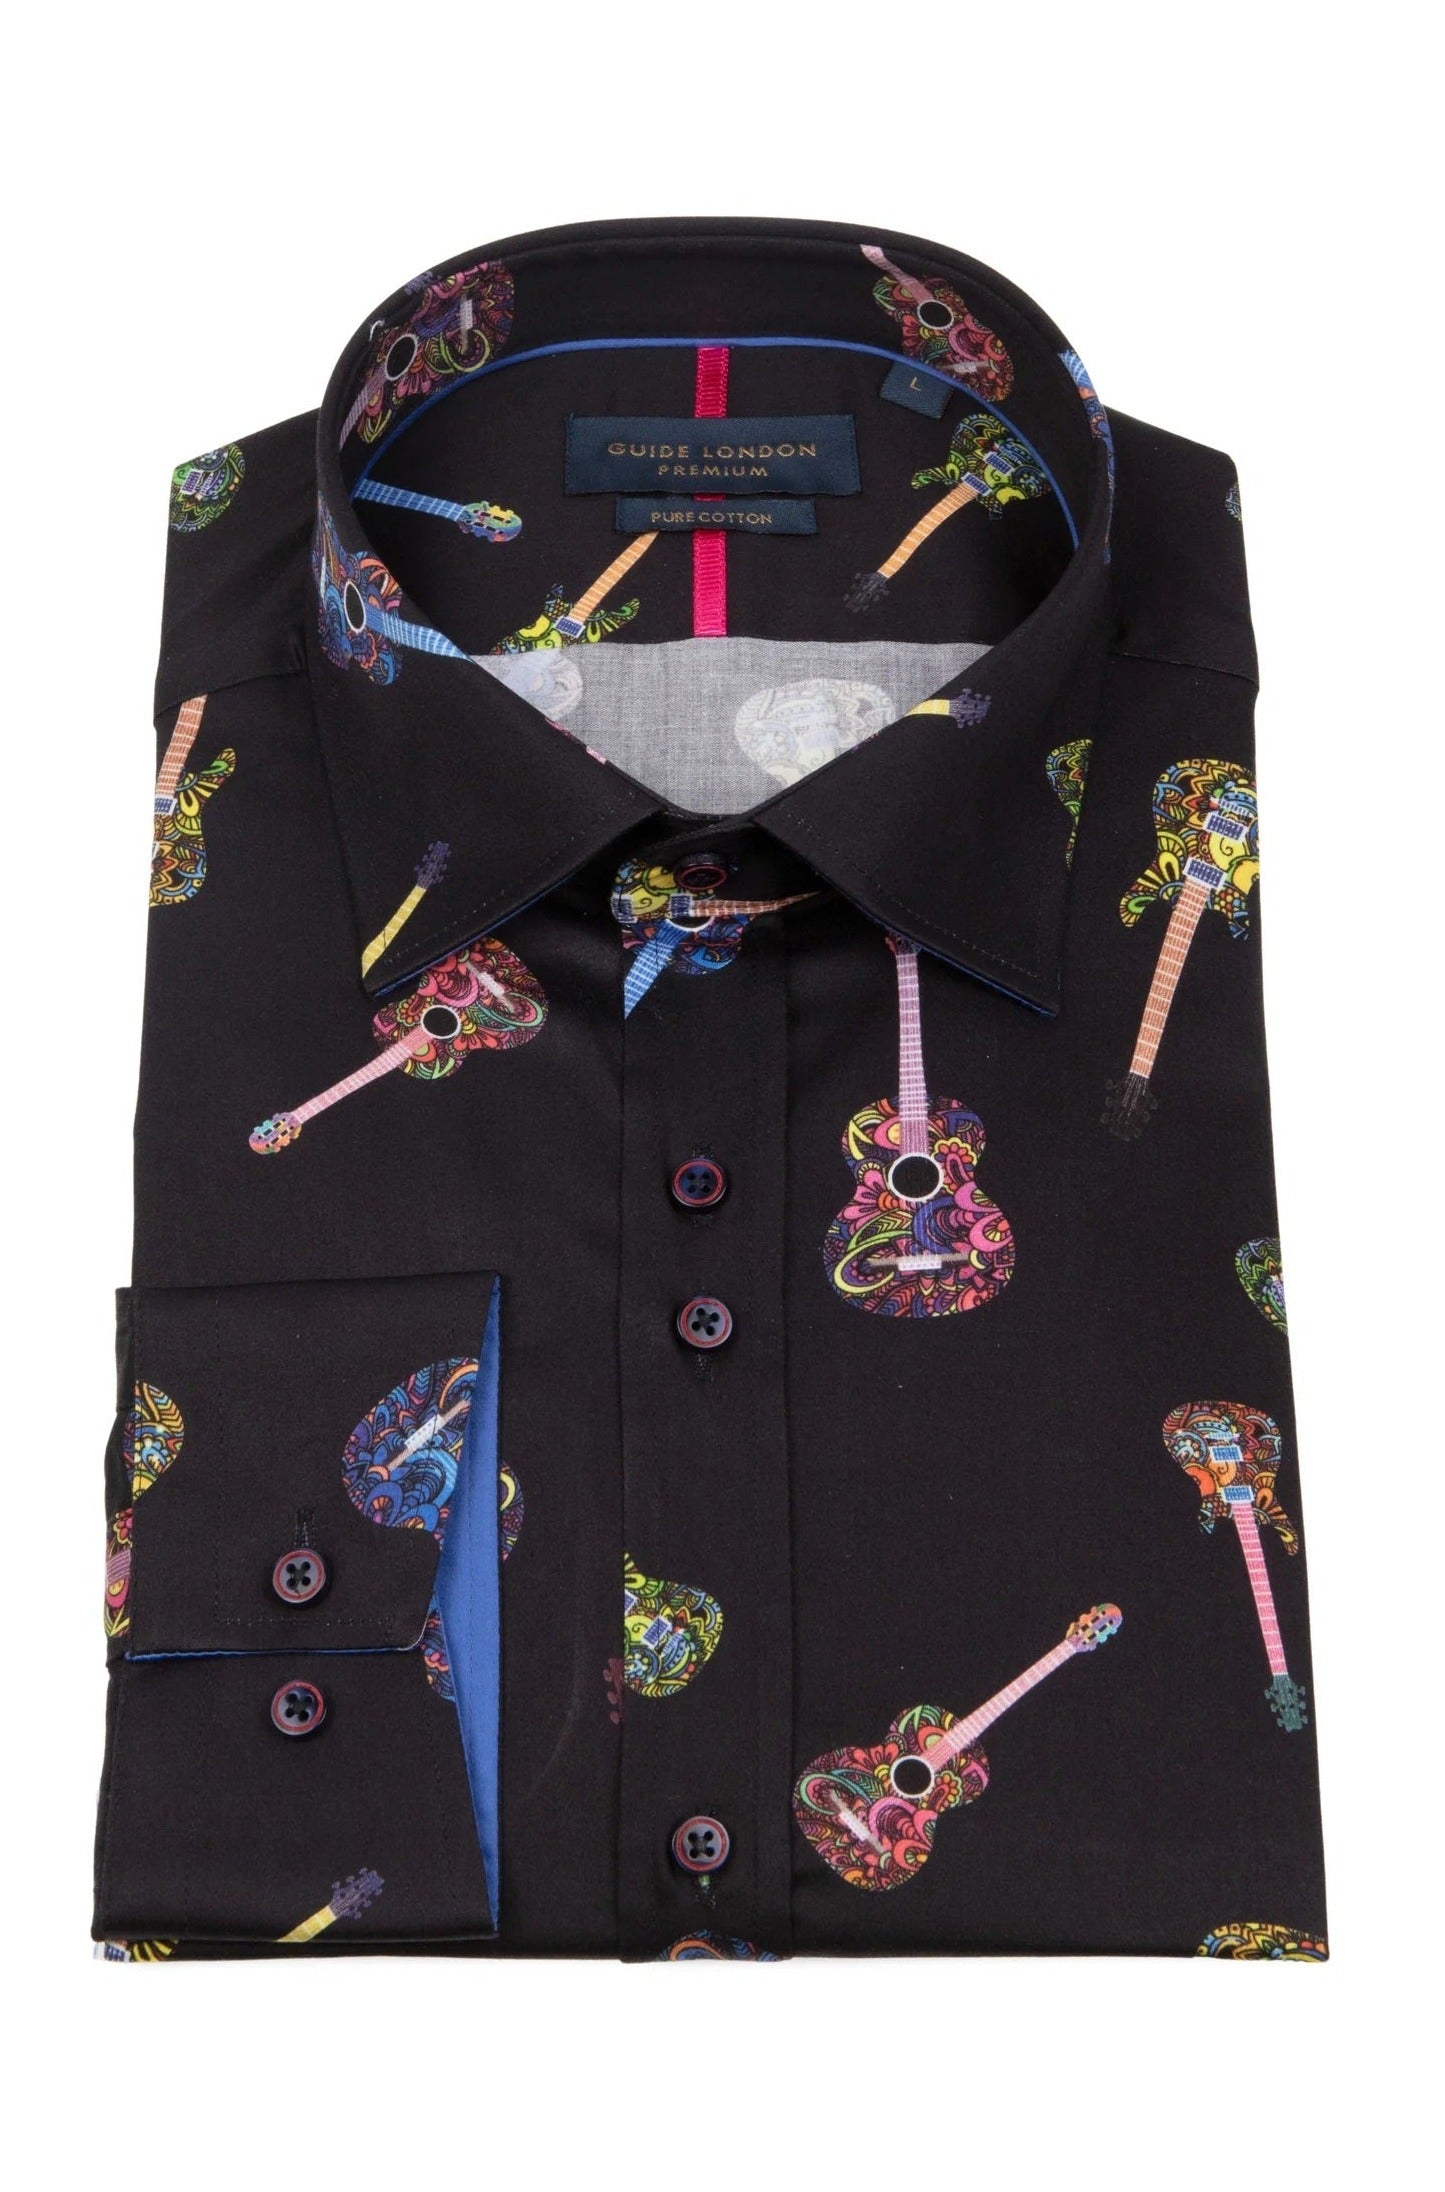 Guide London Violin Long Sleeve Cotton Shirt LS76743 - Black/Multicolour